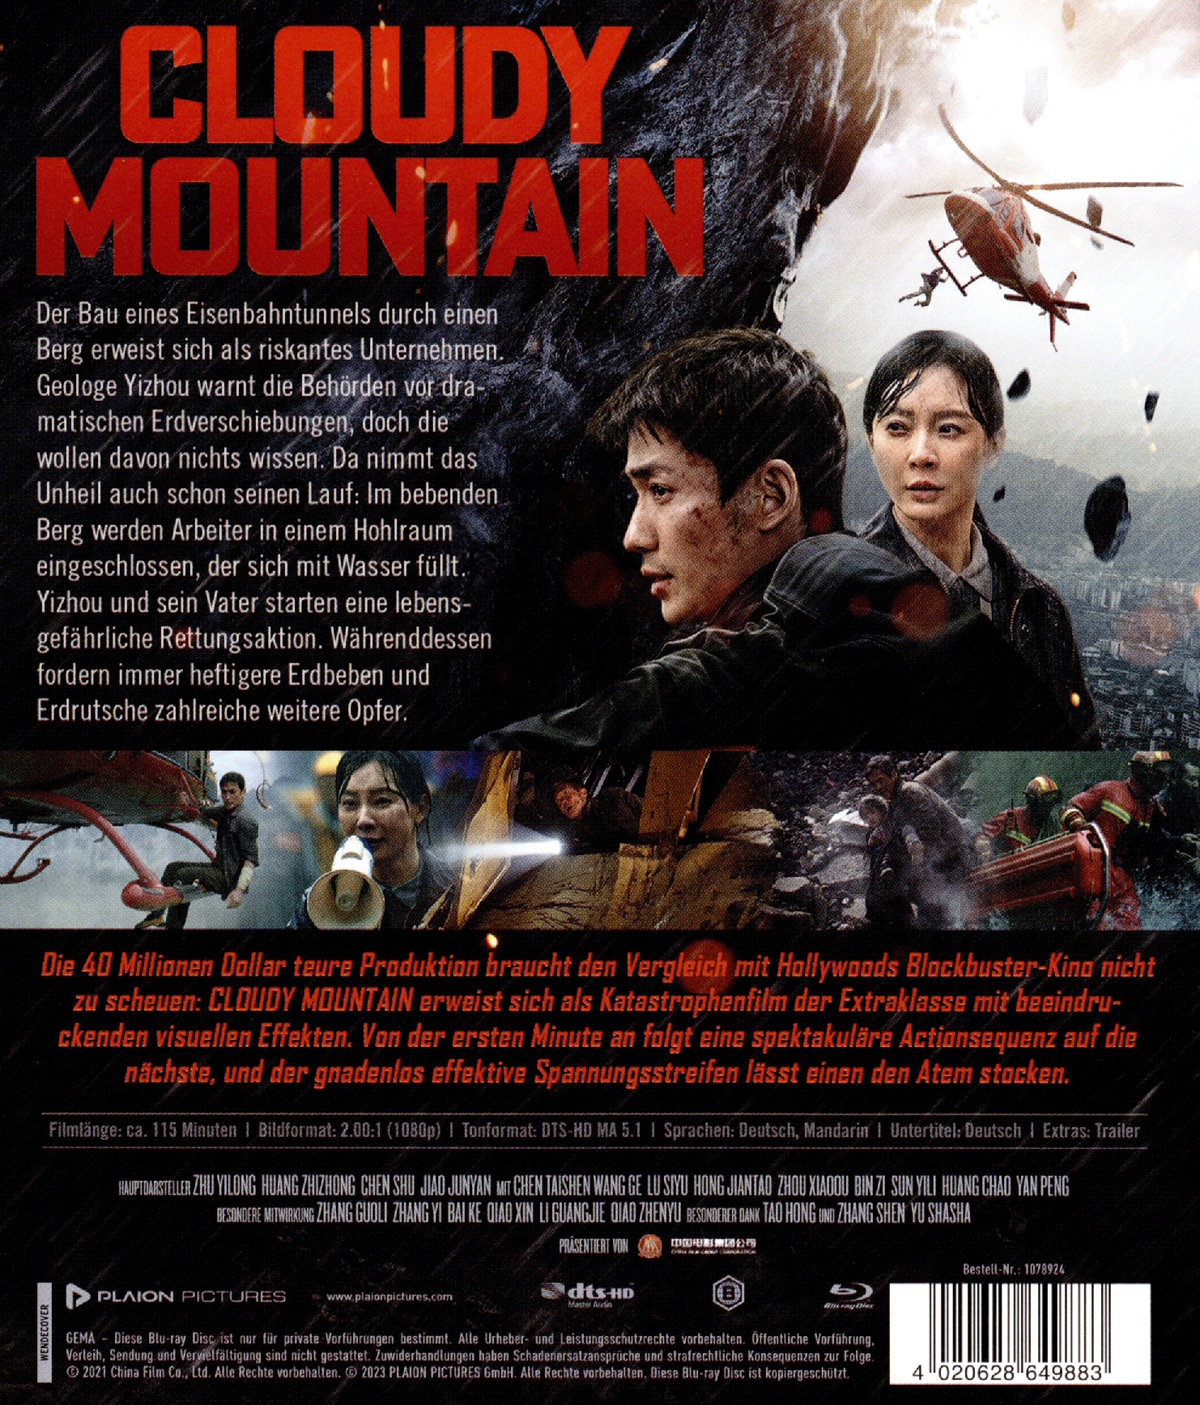 Cloudy Mountain  (Blu-ray Disc)